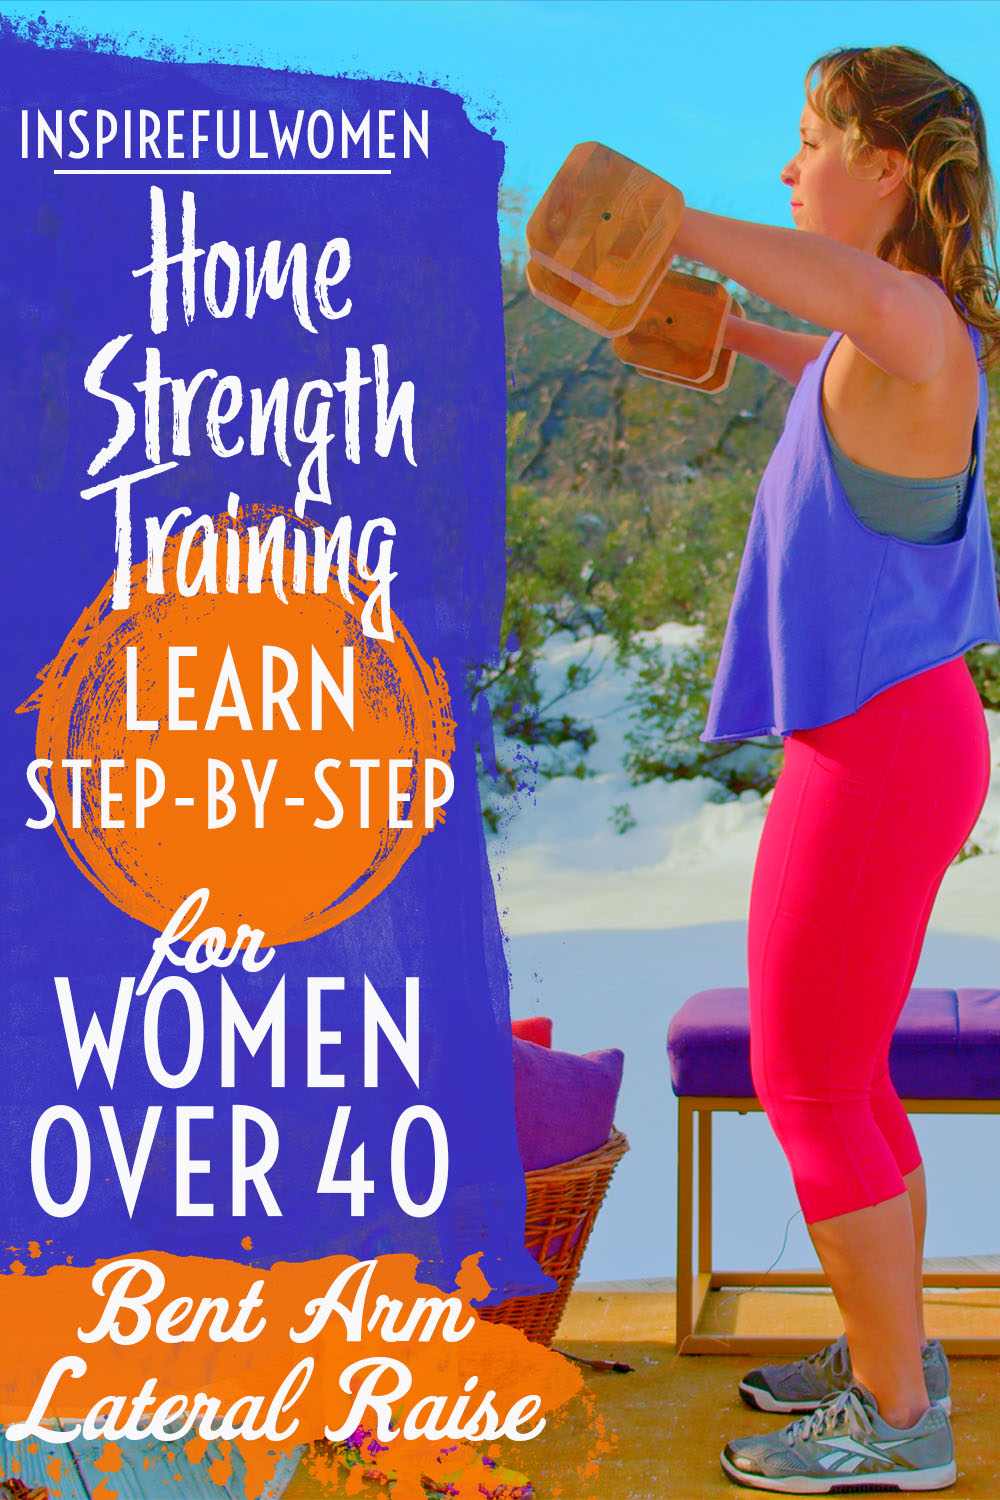 bent-elbow-side-raise-dumbbell-home-resistance-training-shoulder-exercise-women-40+